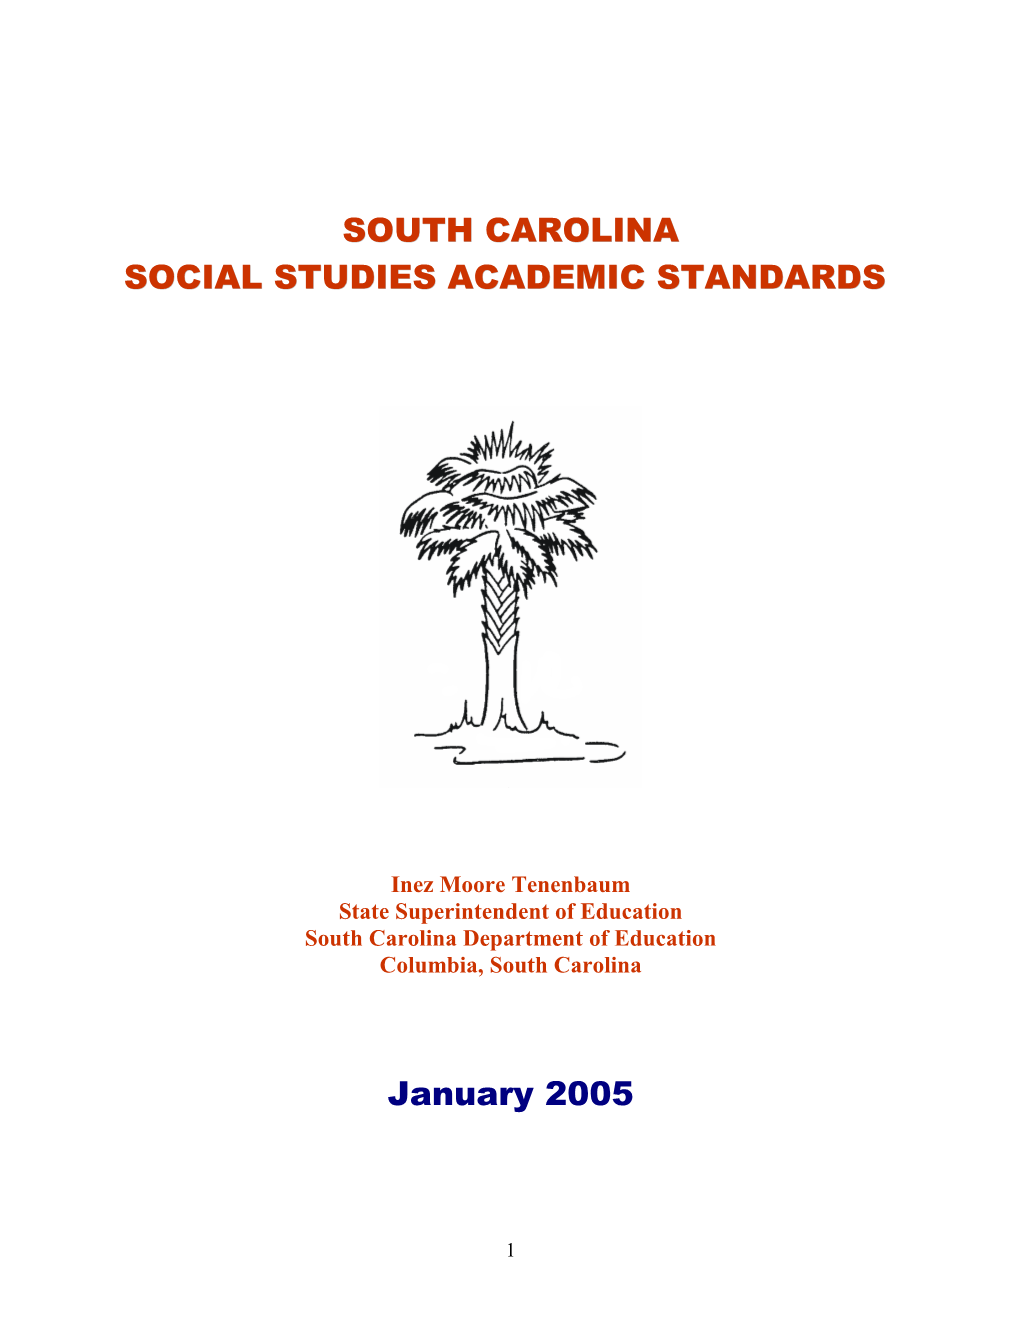 Social Studies Academic Standards